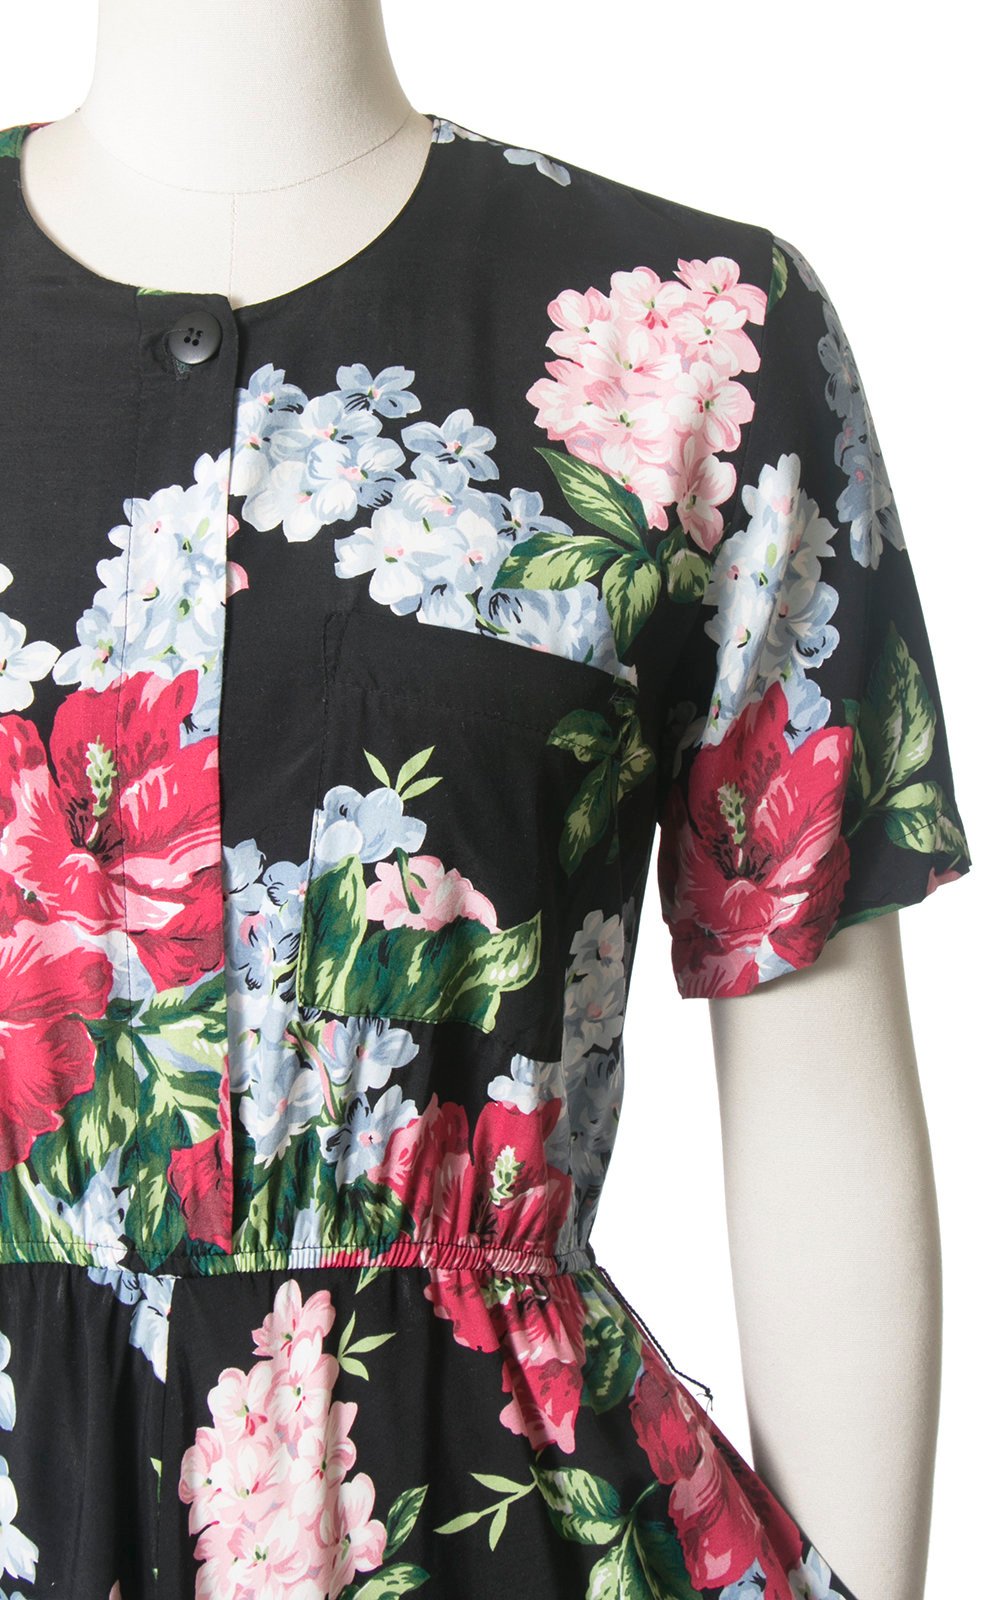 Vintage 1980s Dress | 80s CAROL ANDERSON Floral Print Black Rayon Shirt Dress Full Skirt Shirtwaist Midi Day Dress with Pockets (medium)